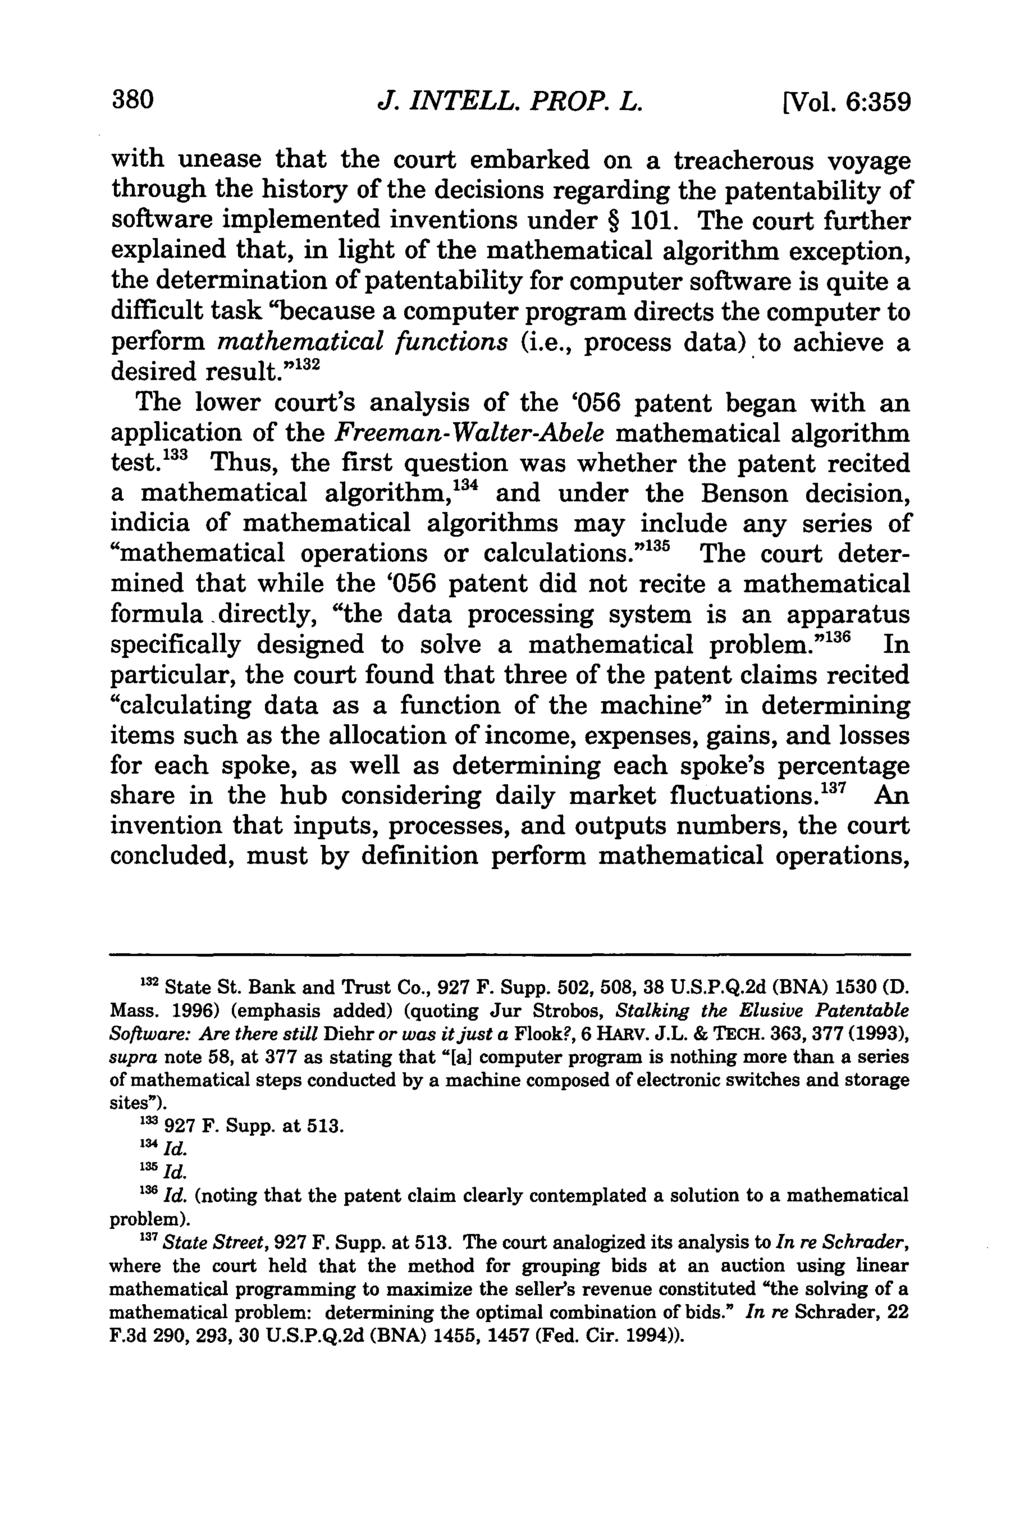 380 Journal of Intellectual Property Law, Vol. 6, Iss. 2 [1999], Art. 6 J. INTELL. PROP. L. [Vol.